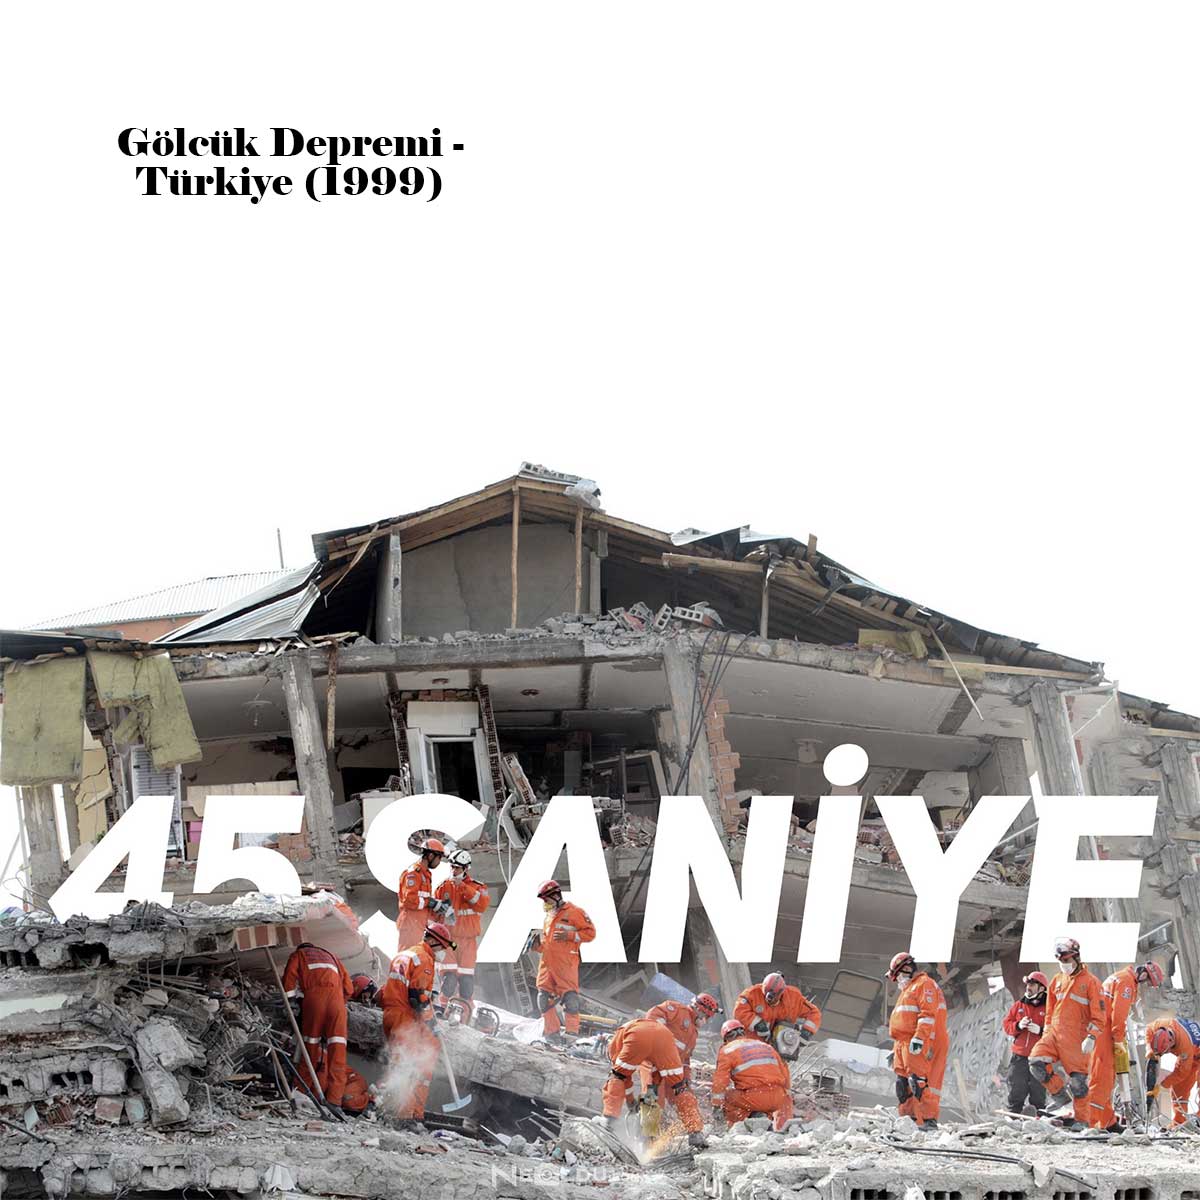 golcuk-depremi---turkiye-(1999).jpg